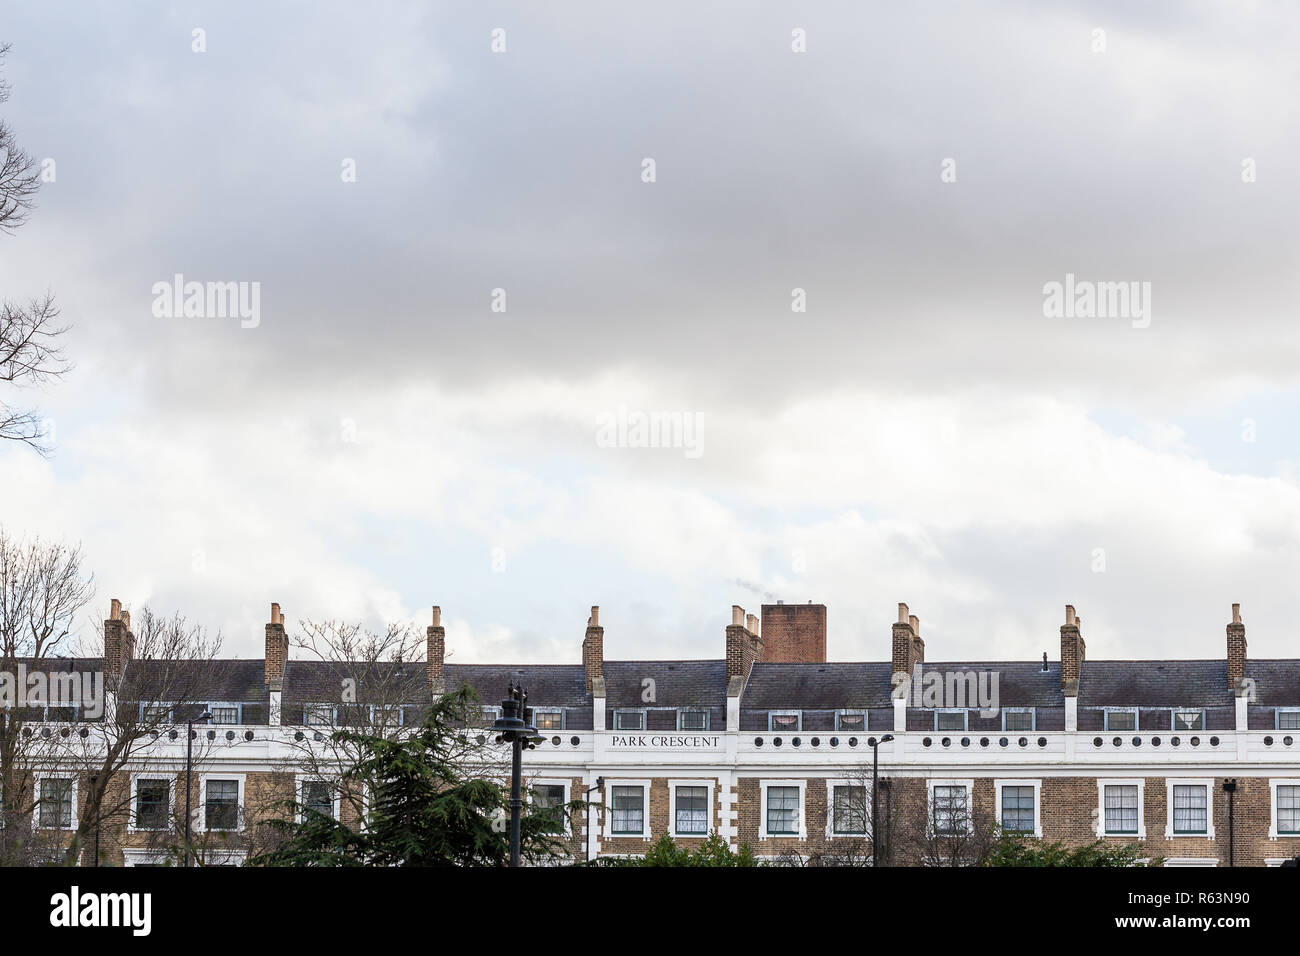 Park Crescent on Stoke Newington Church Street, Hackney, Stokey, North London, N16, England Stock Photo